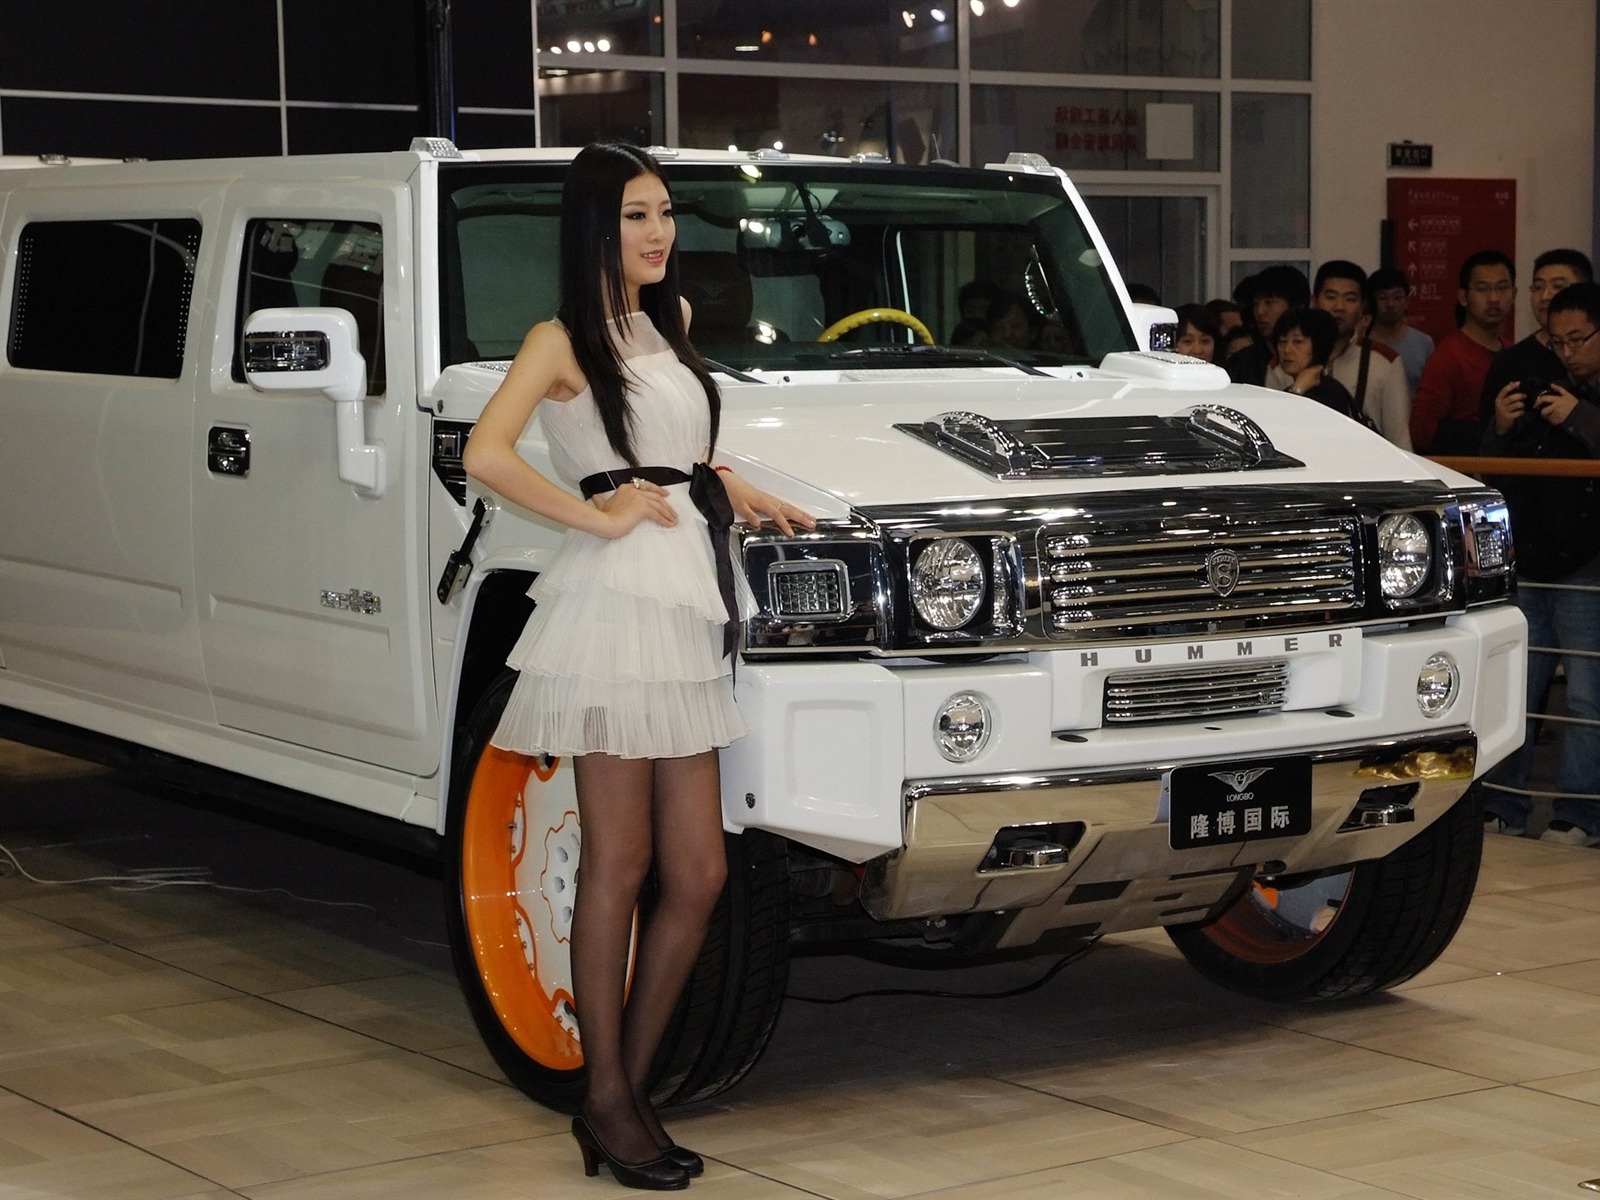 2010 Salón Internacional del Automóvil de Beijing Heung Che belleza (obras barras de refuerzo) #6 - 1600x1200